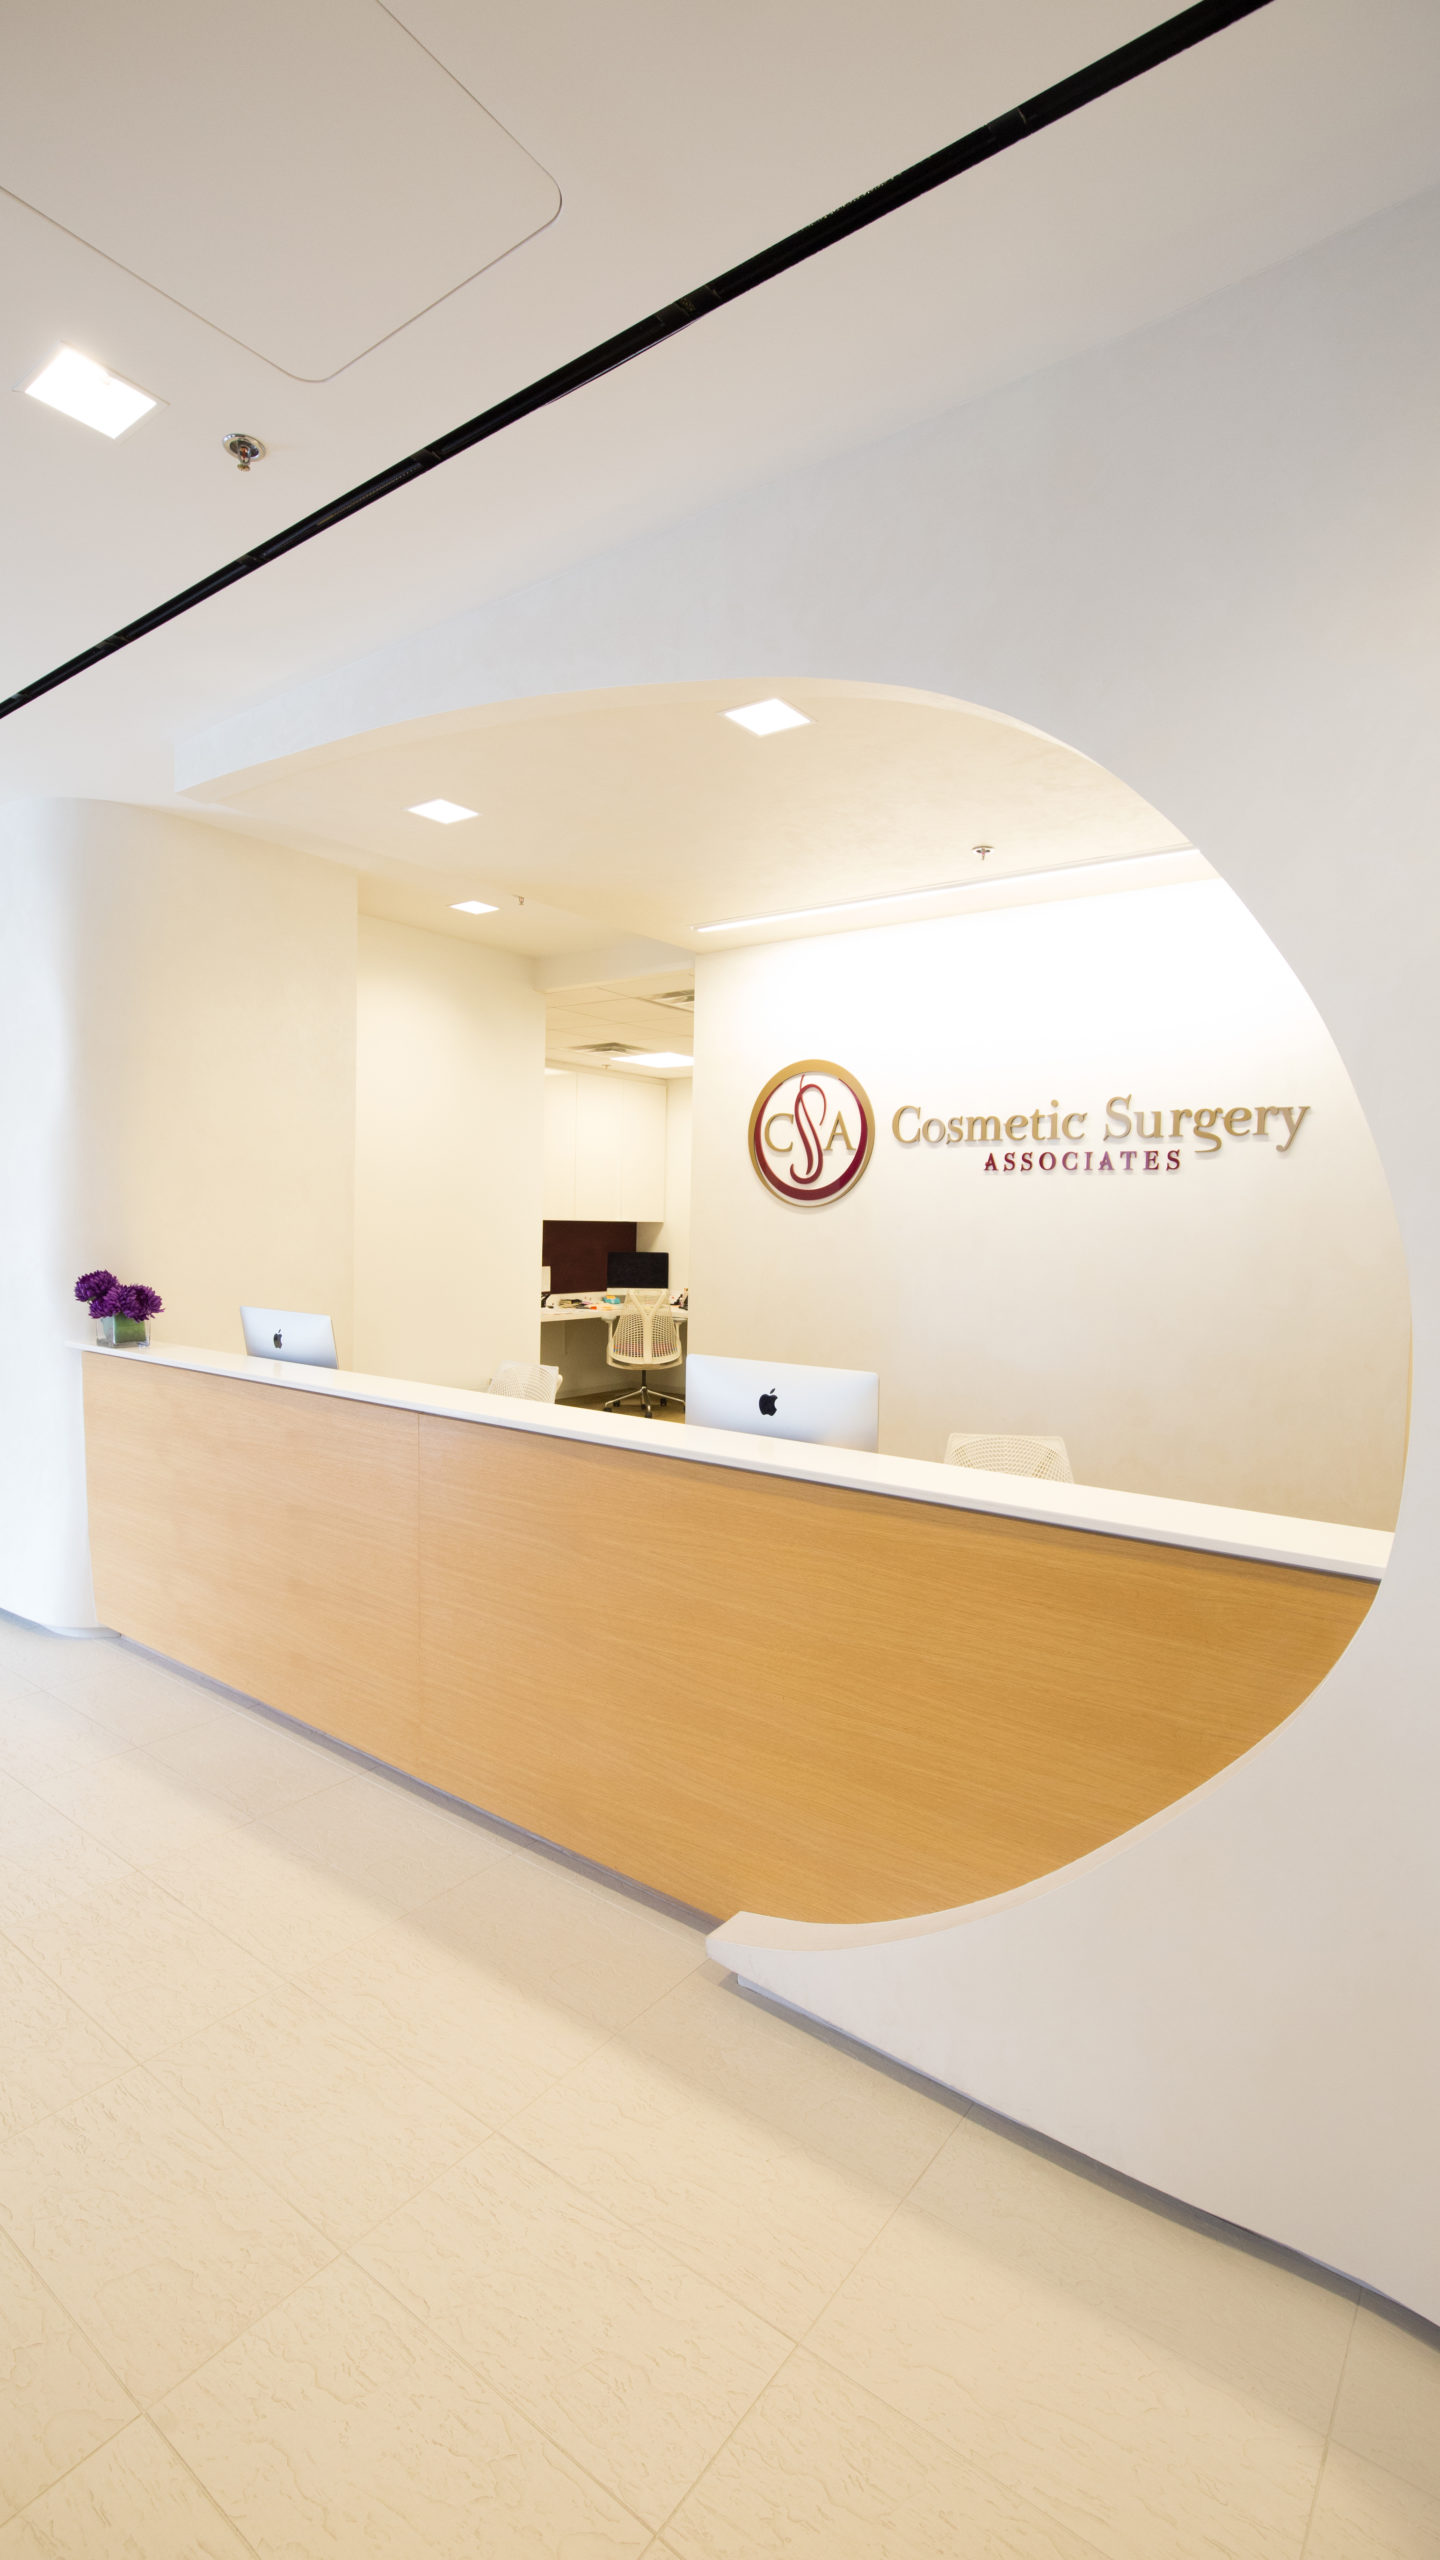 Cosmetic Surgery Associates - Reception